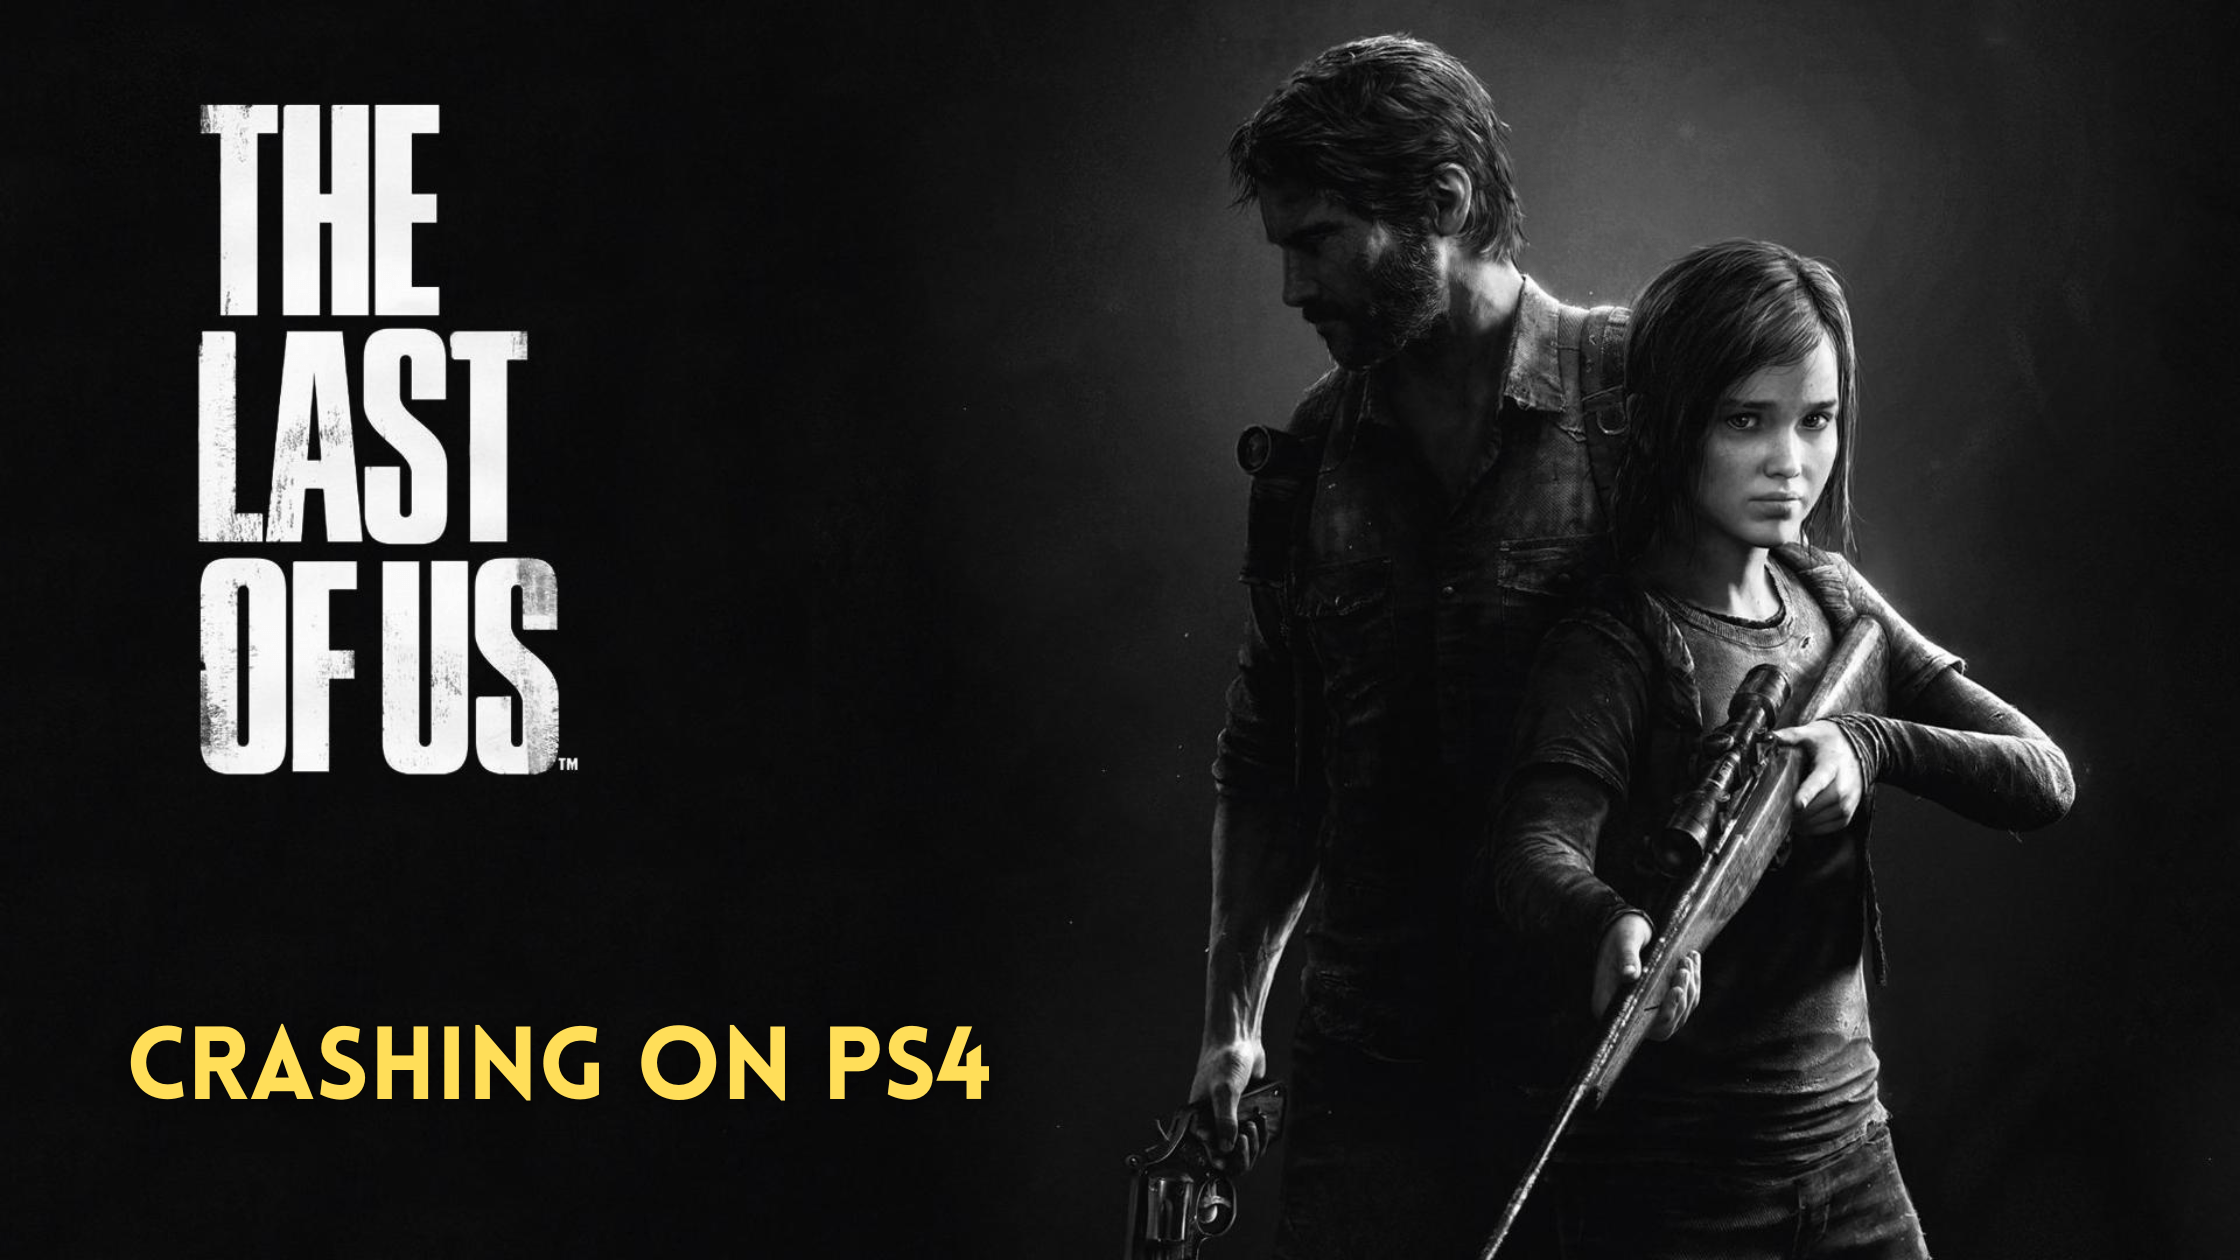 The Last of Us keeps crashing on PS4